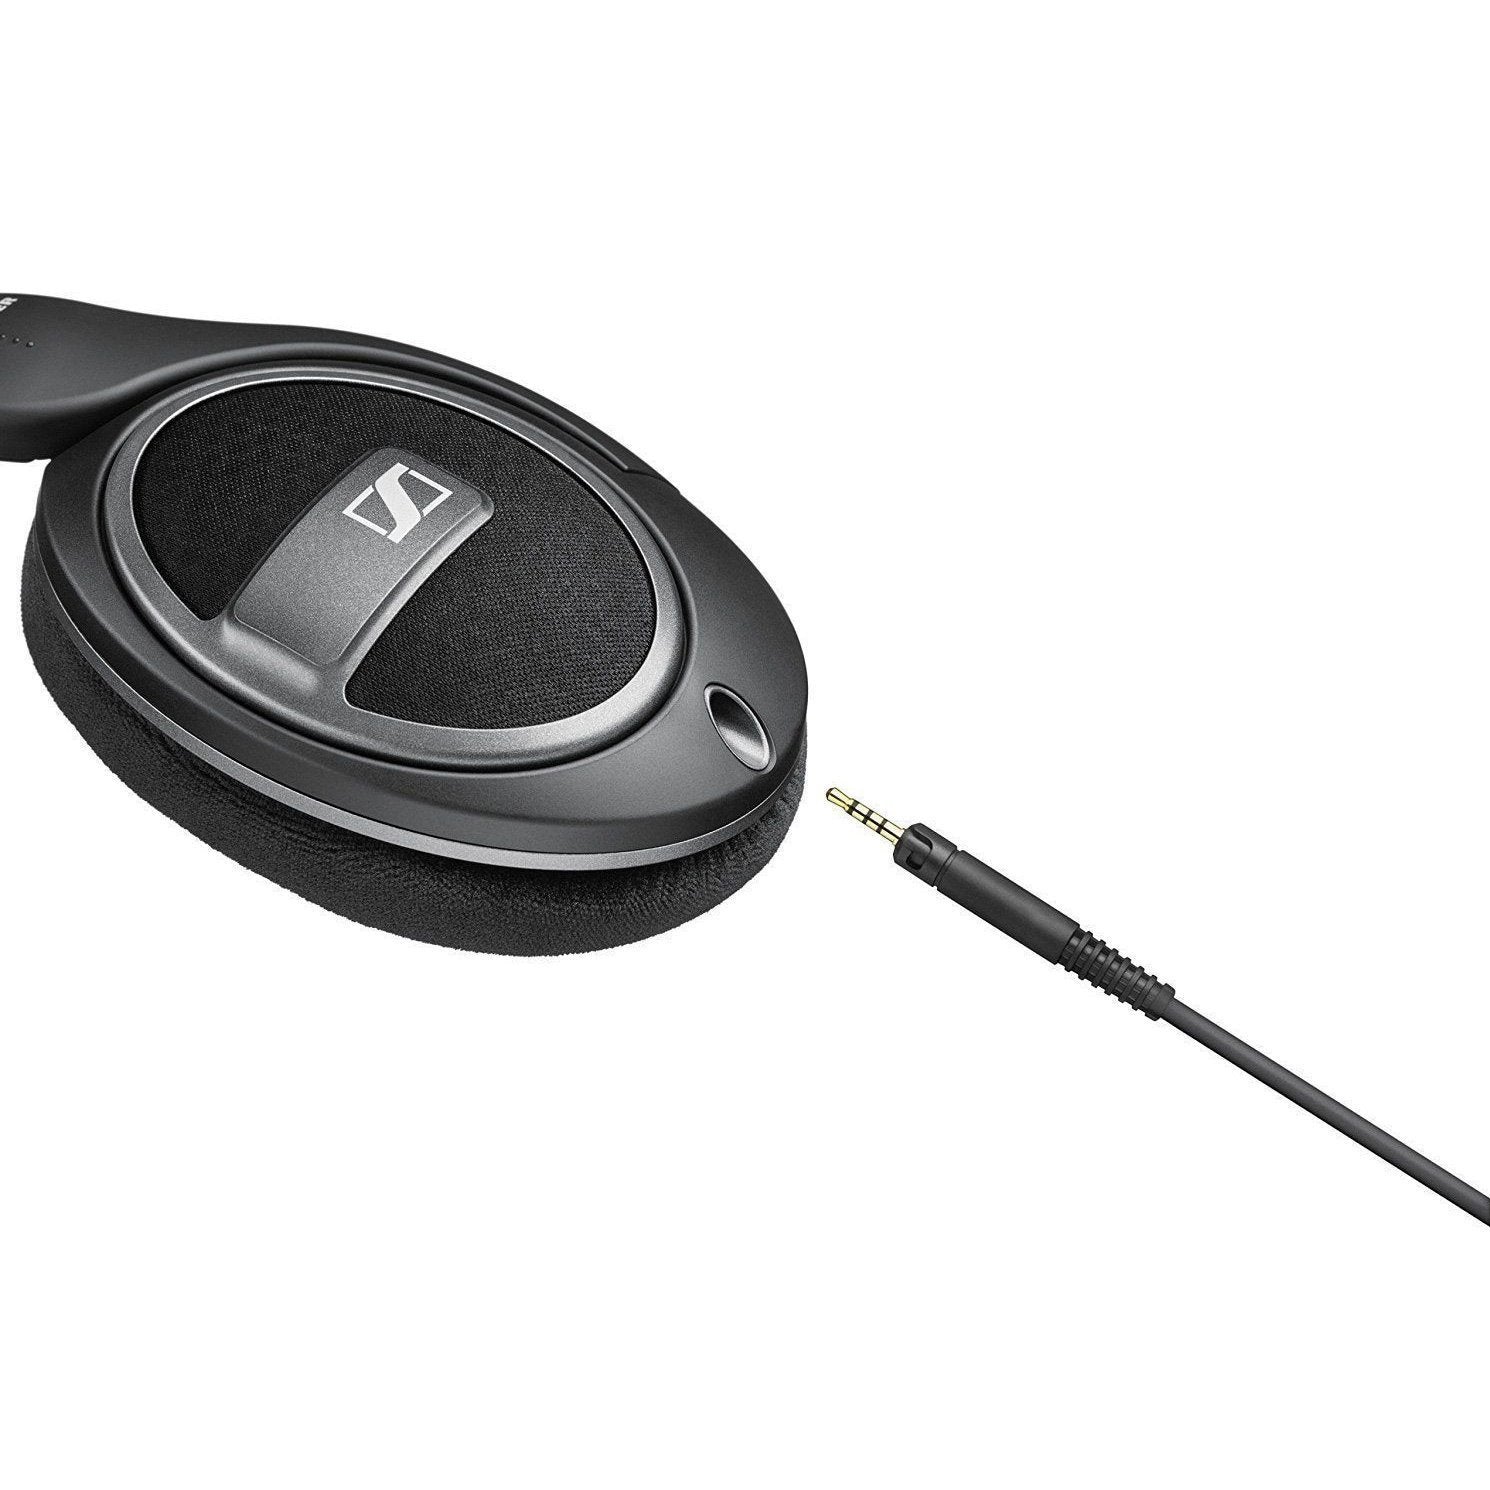 Sennheiser HD 559 Open Back Headphones